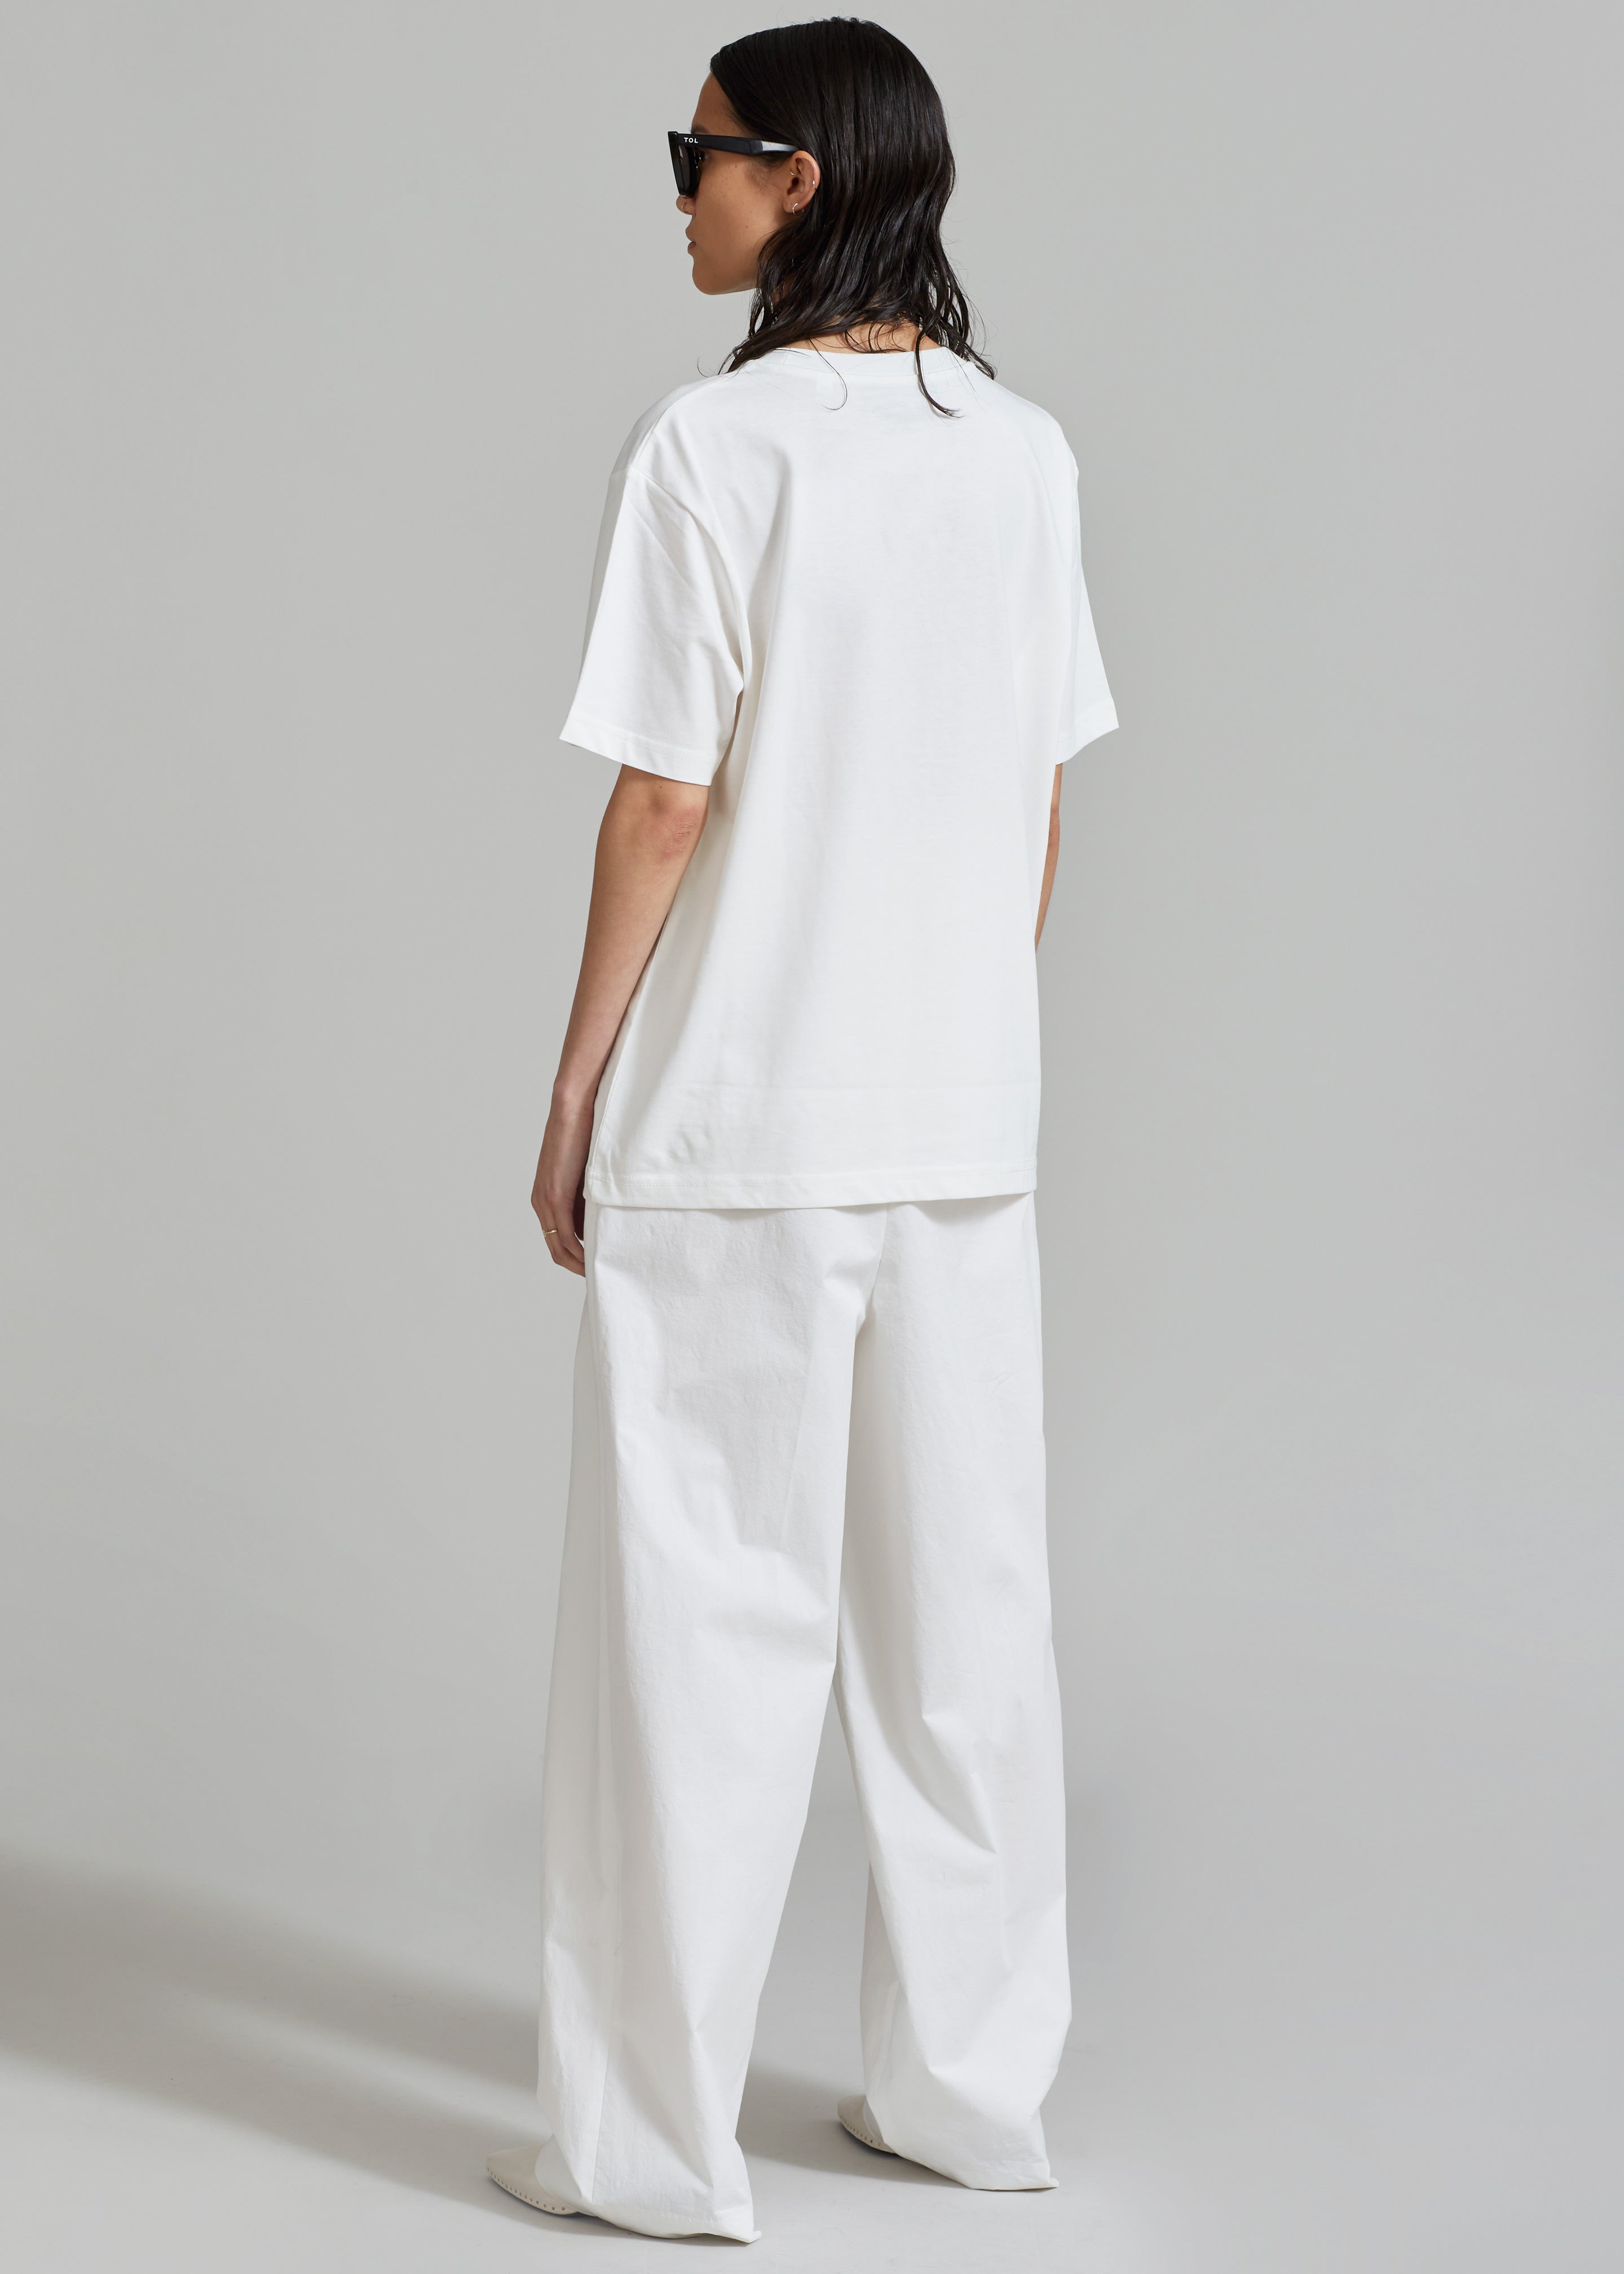 The Frankie Shop x Thomas Lélu Slope T-Shirt - Off White/Black - 10